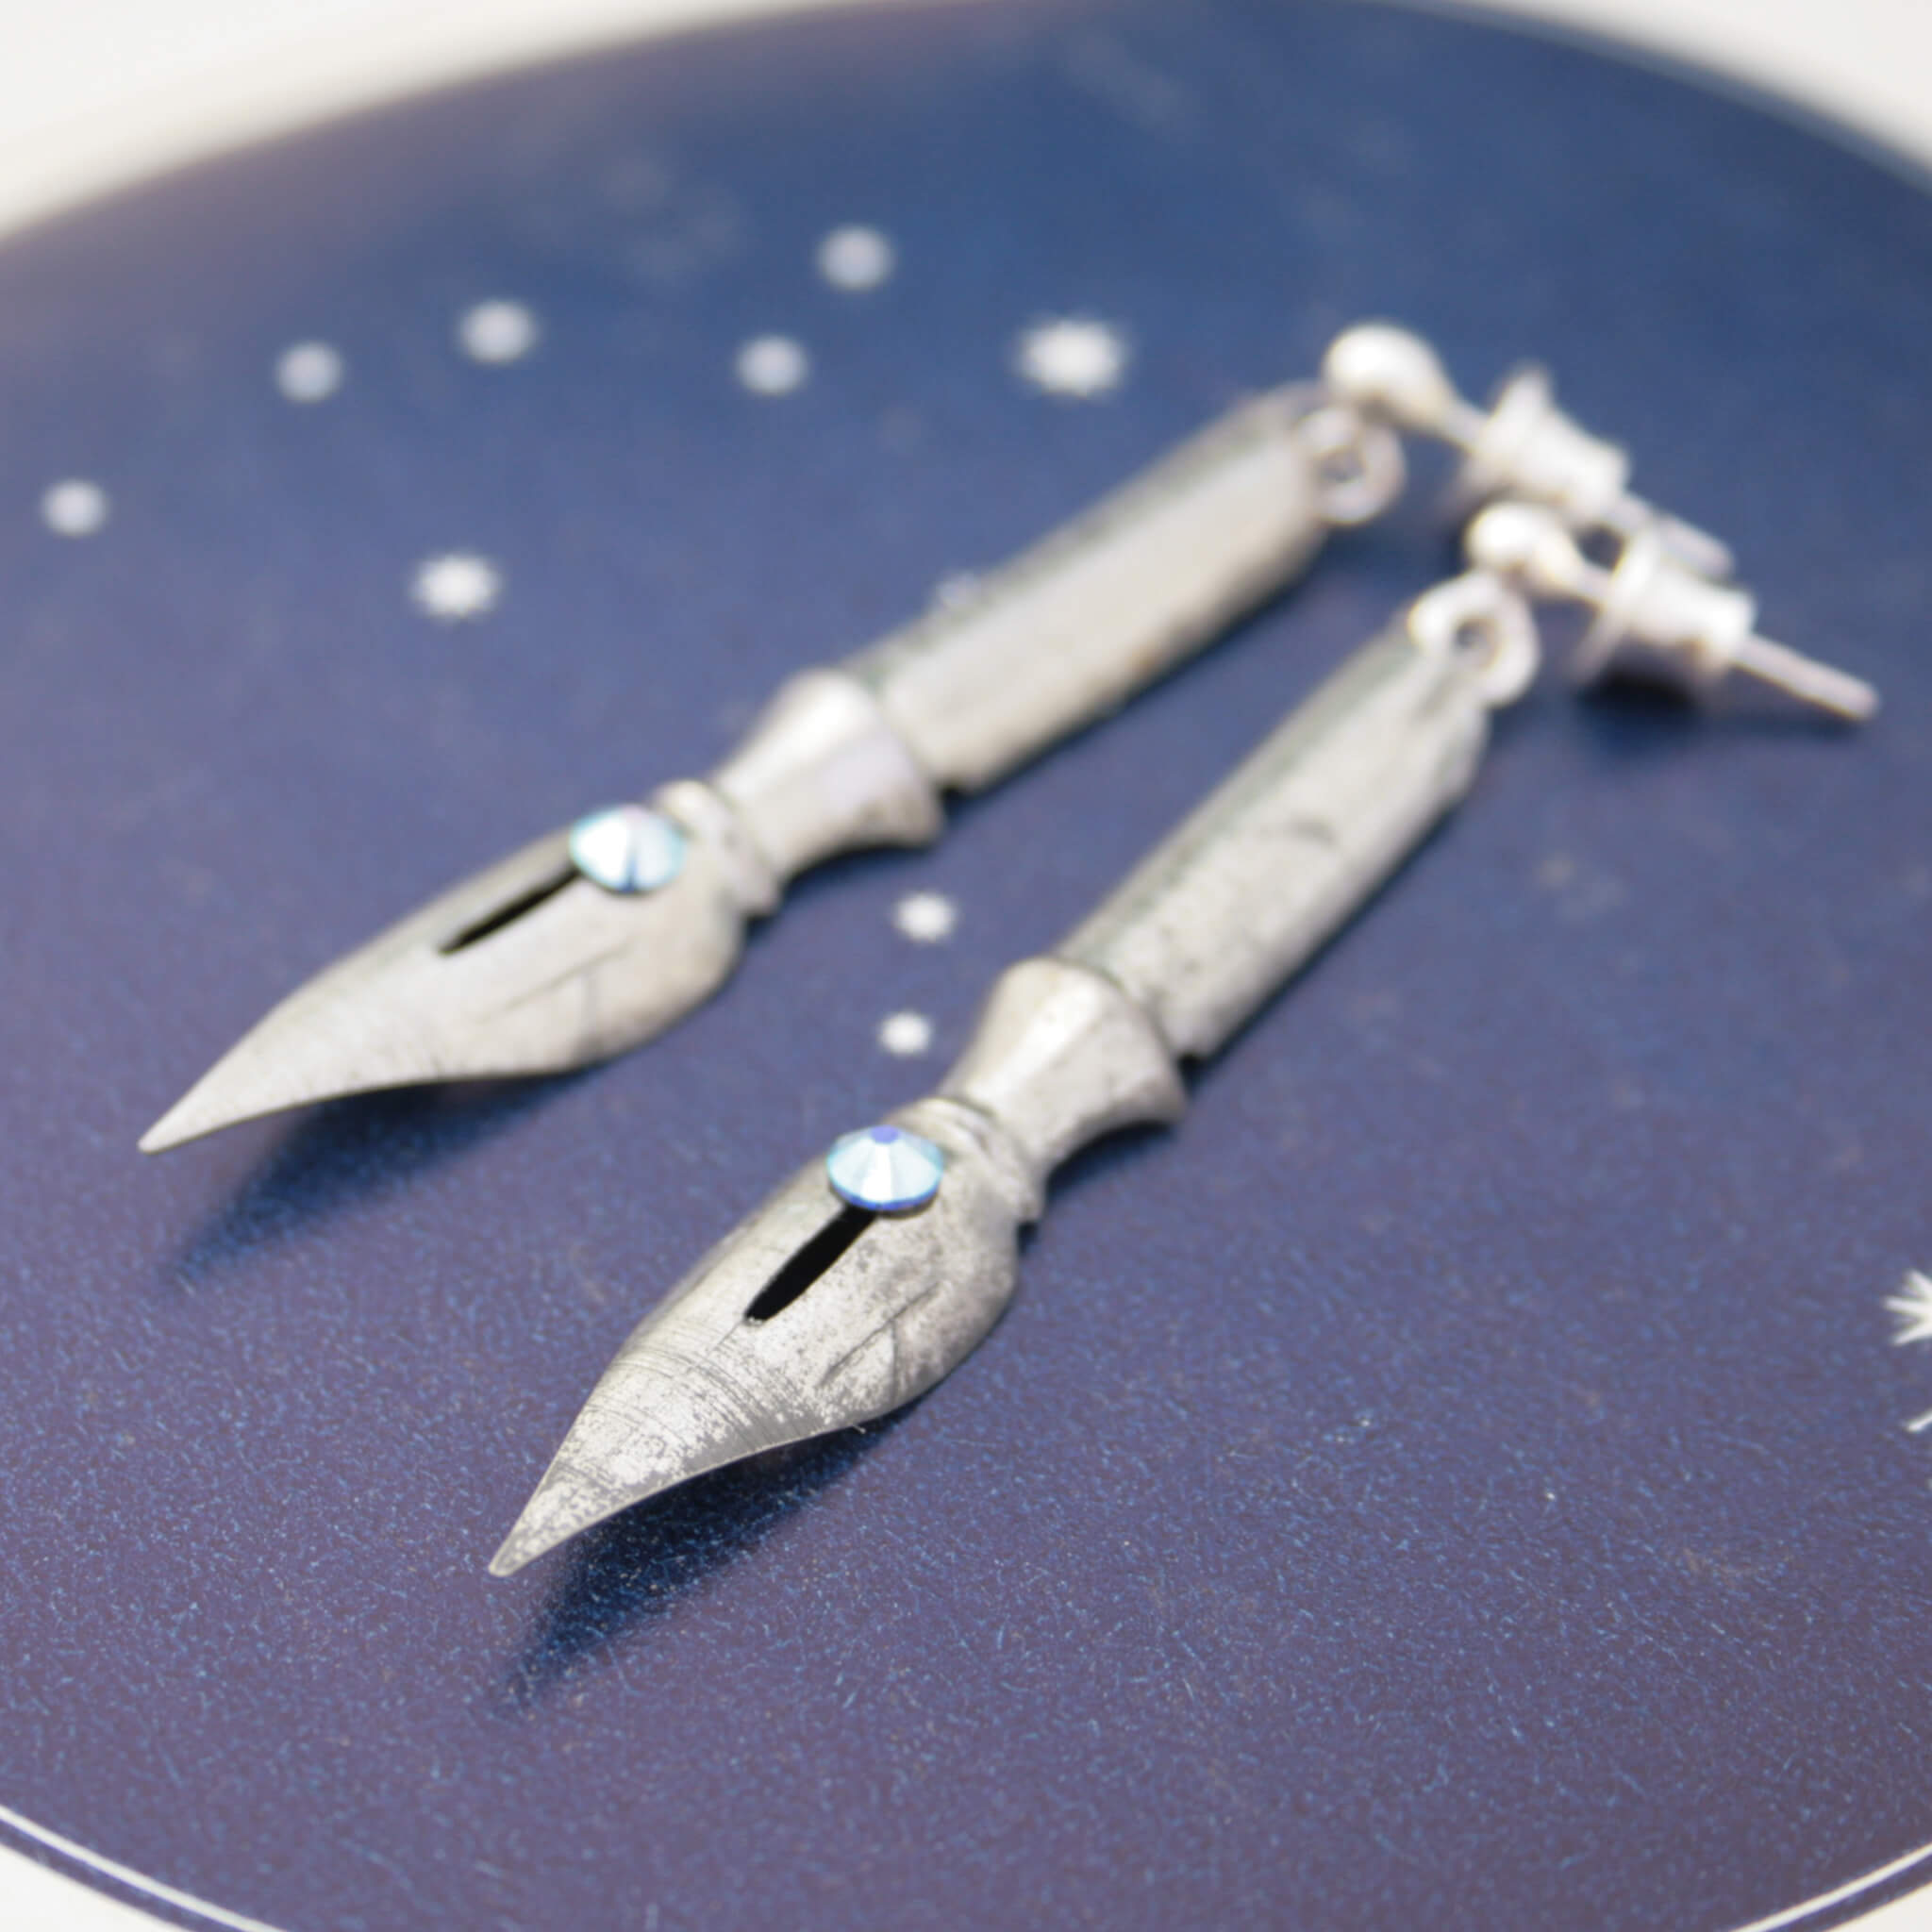 pen nib earrings with aquamarine birthstone crystals on them lying on a constellation print